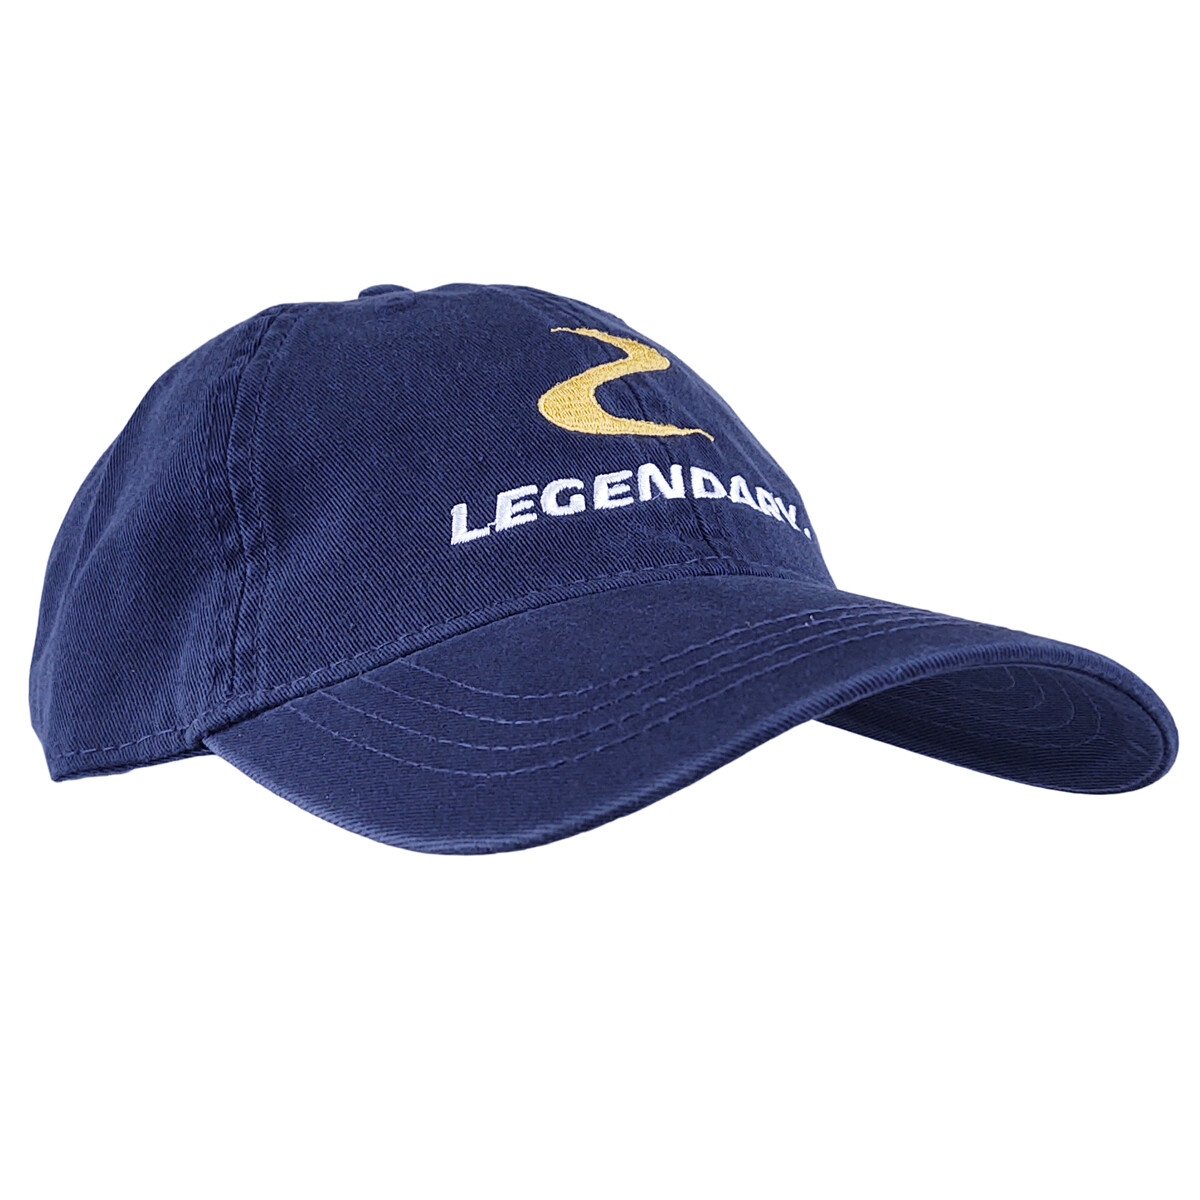 MRRA Legendary Hat-Navy